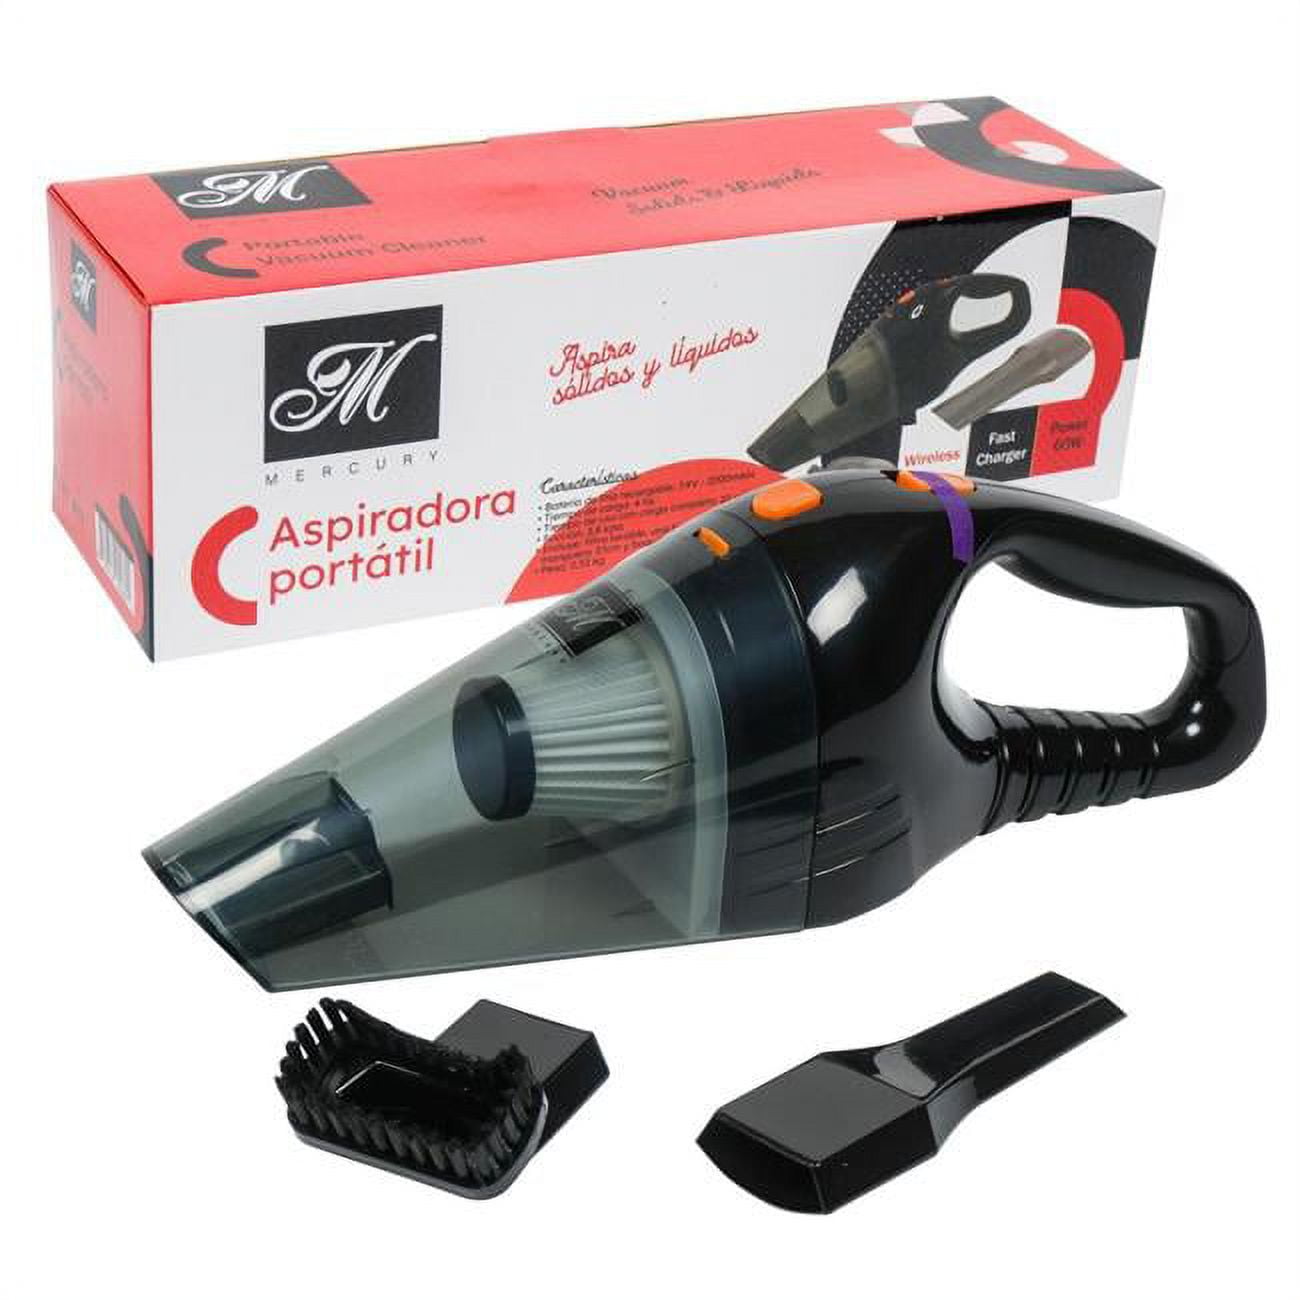 Black+decker Detailer Dustbuster Handheld Vacuum, Hlva315j00w